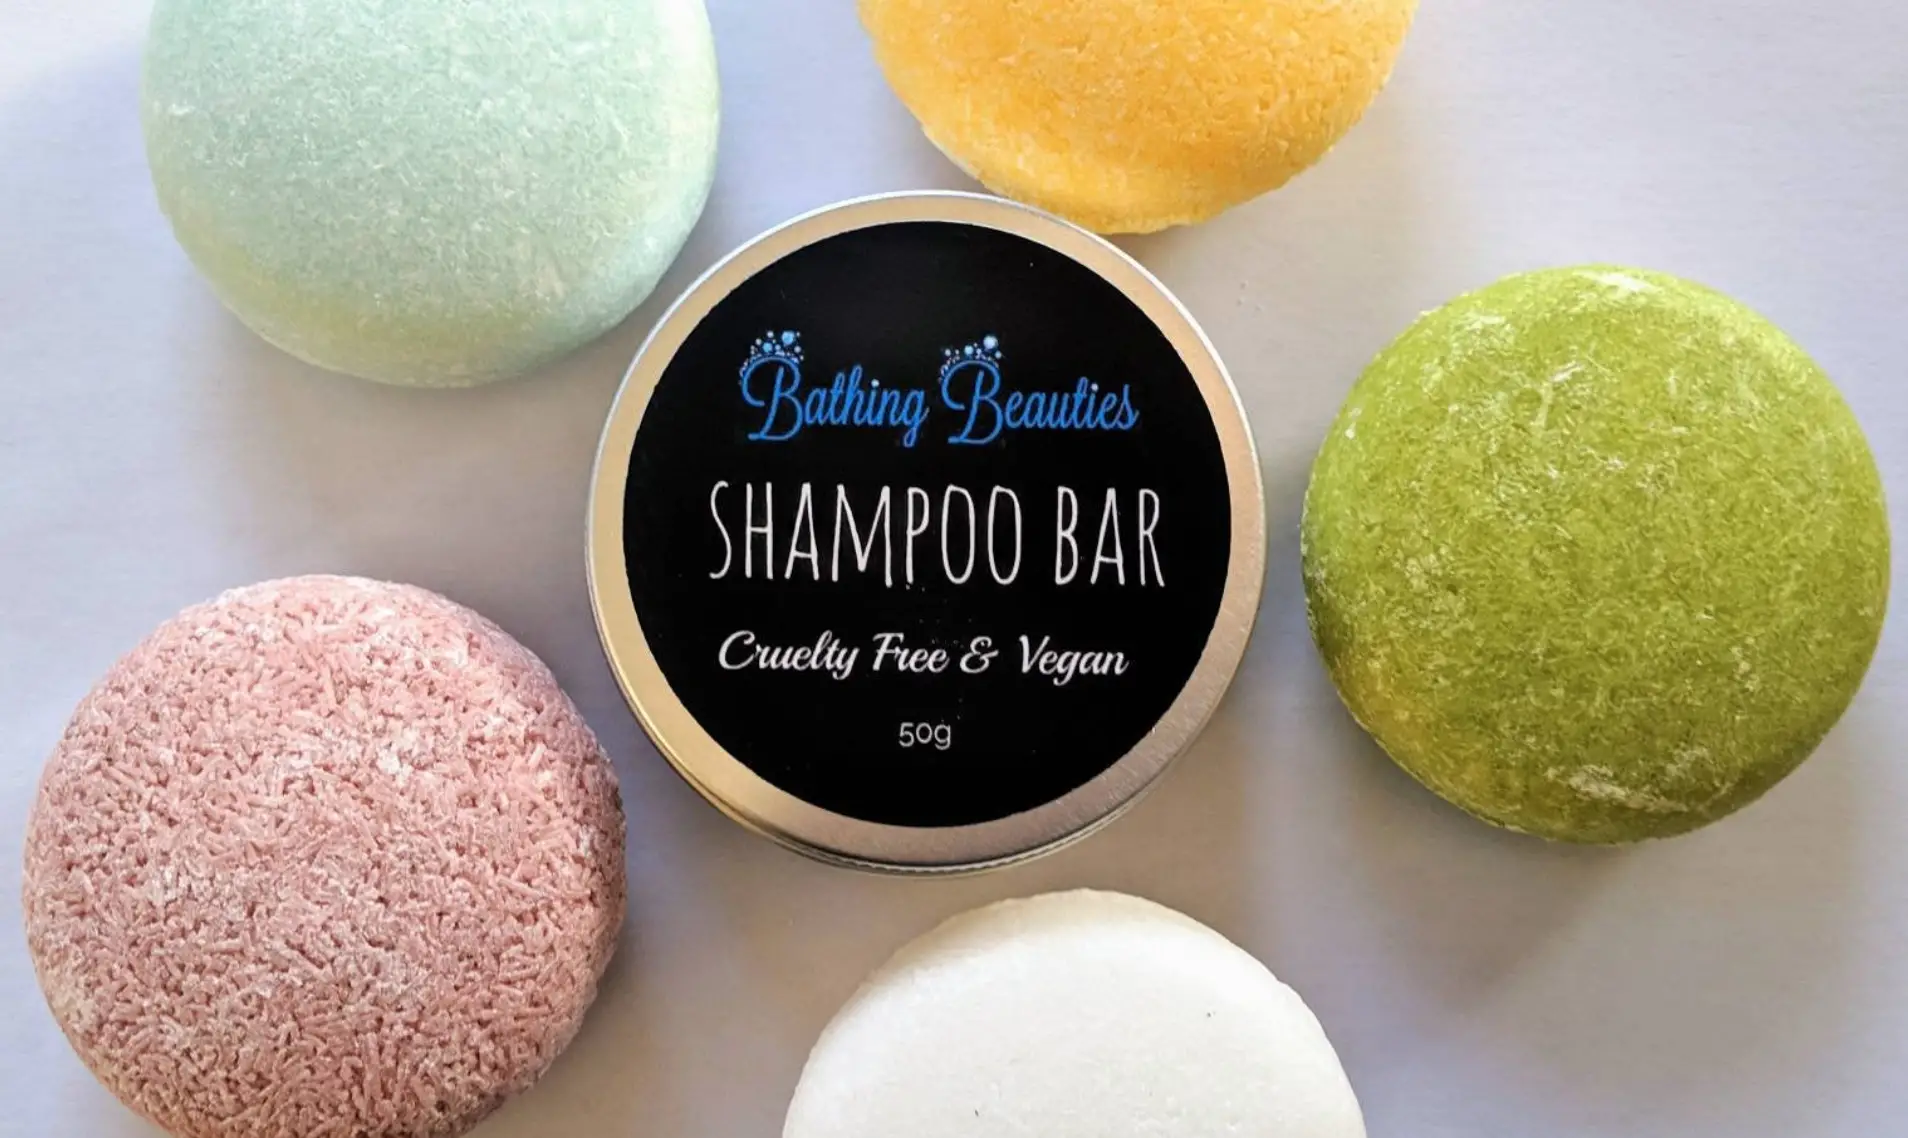 Shampoo bars from BathingBeautiesUK